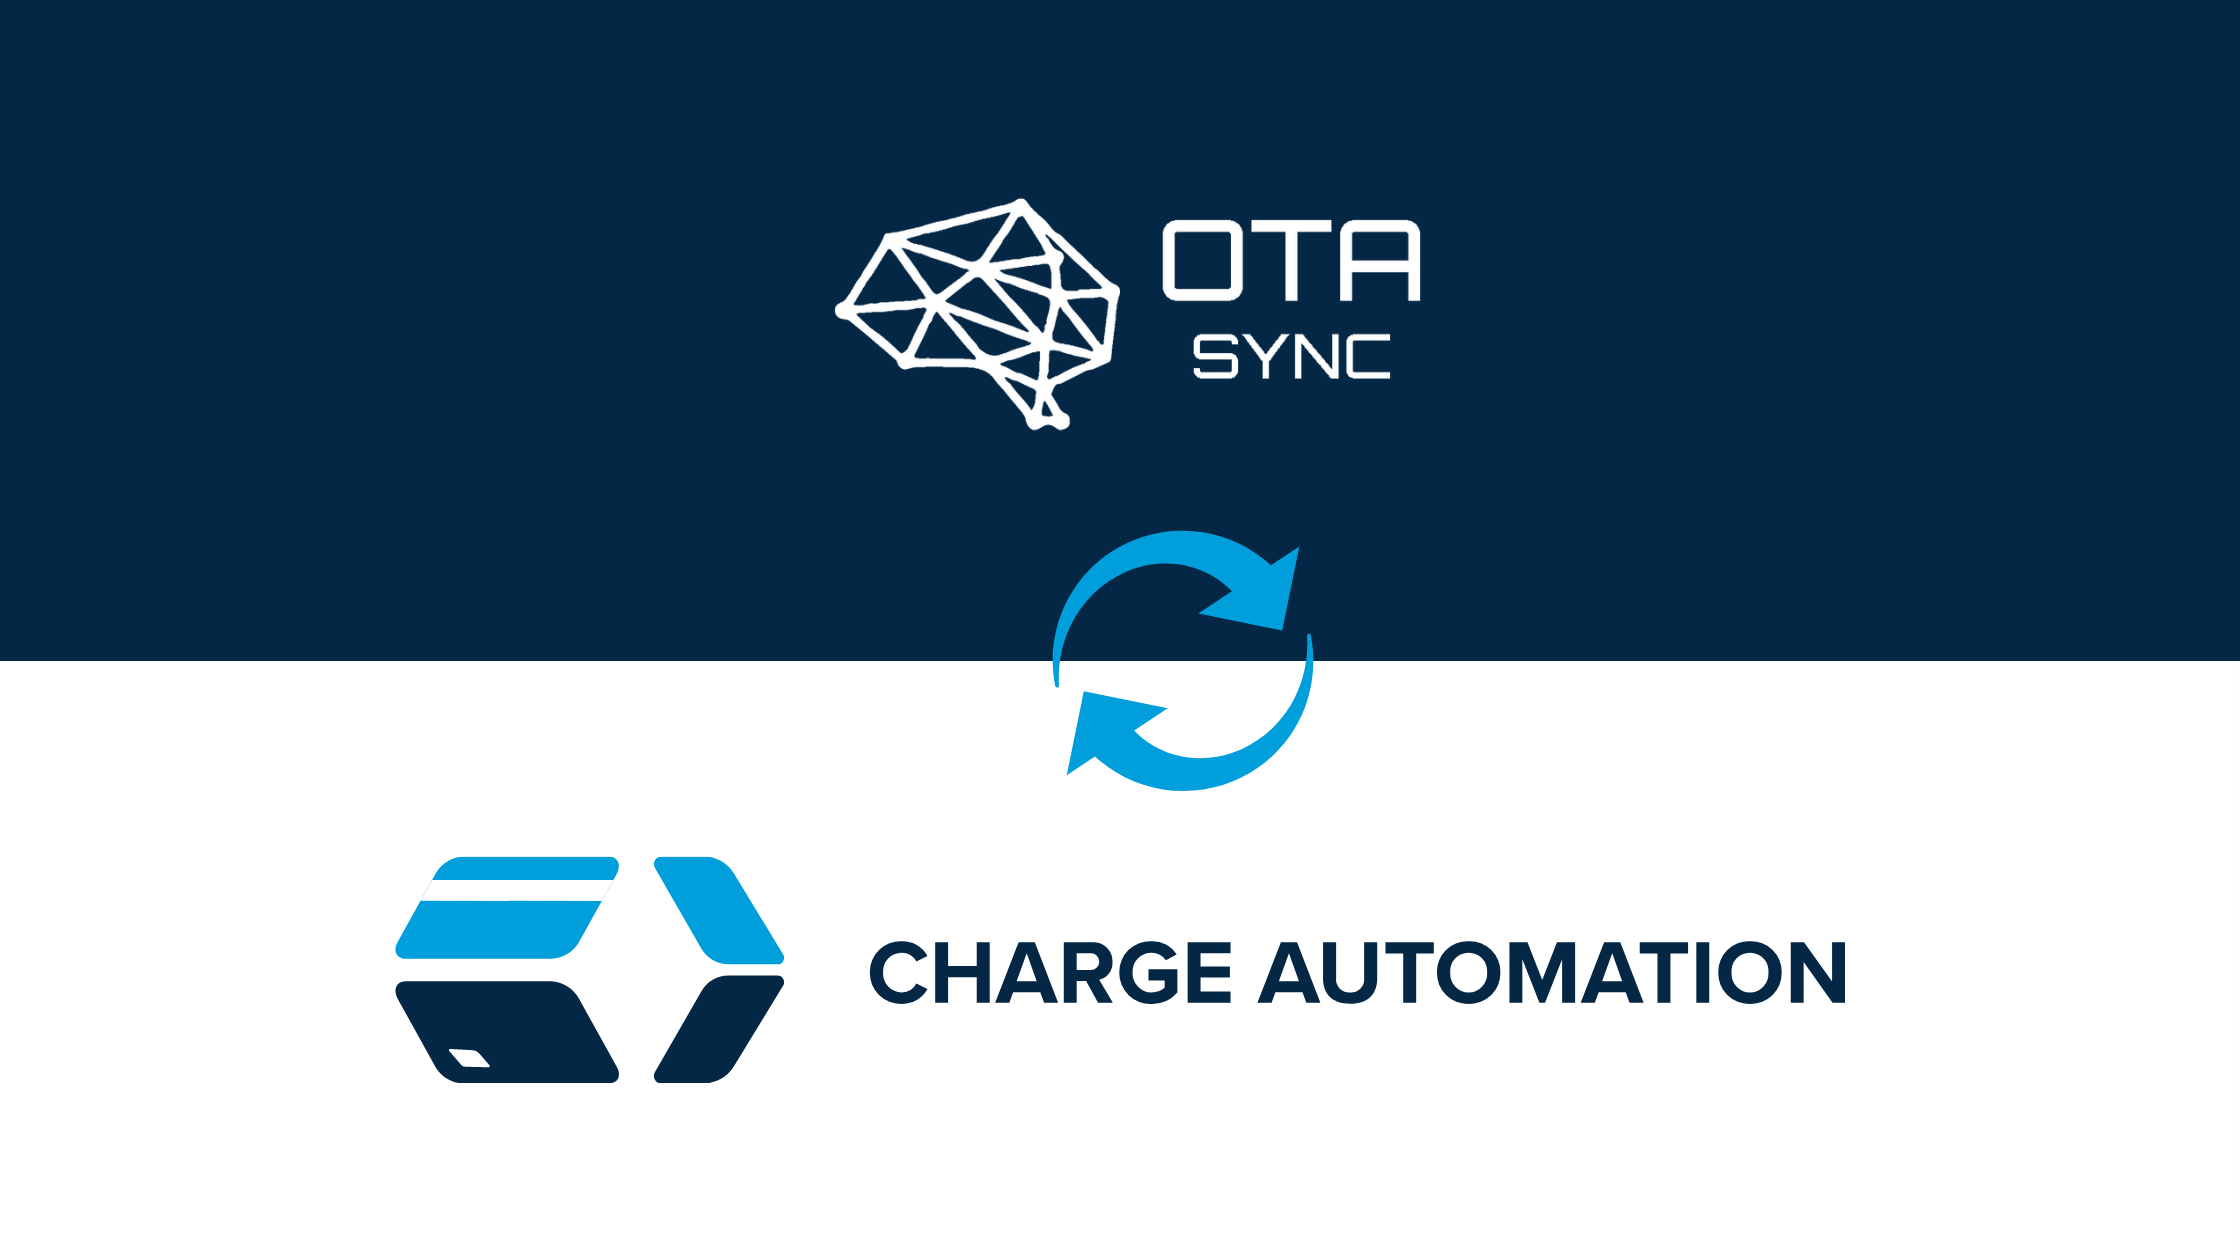 OTA Sync: 与充电自动化连接